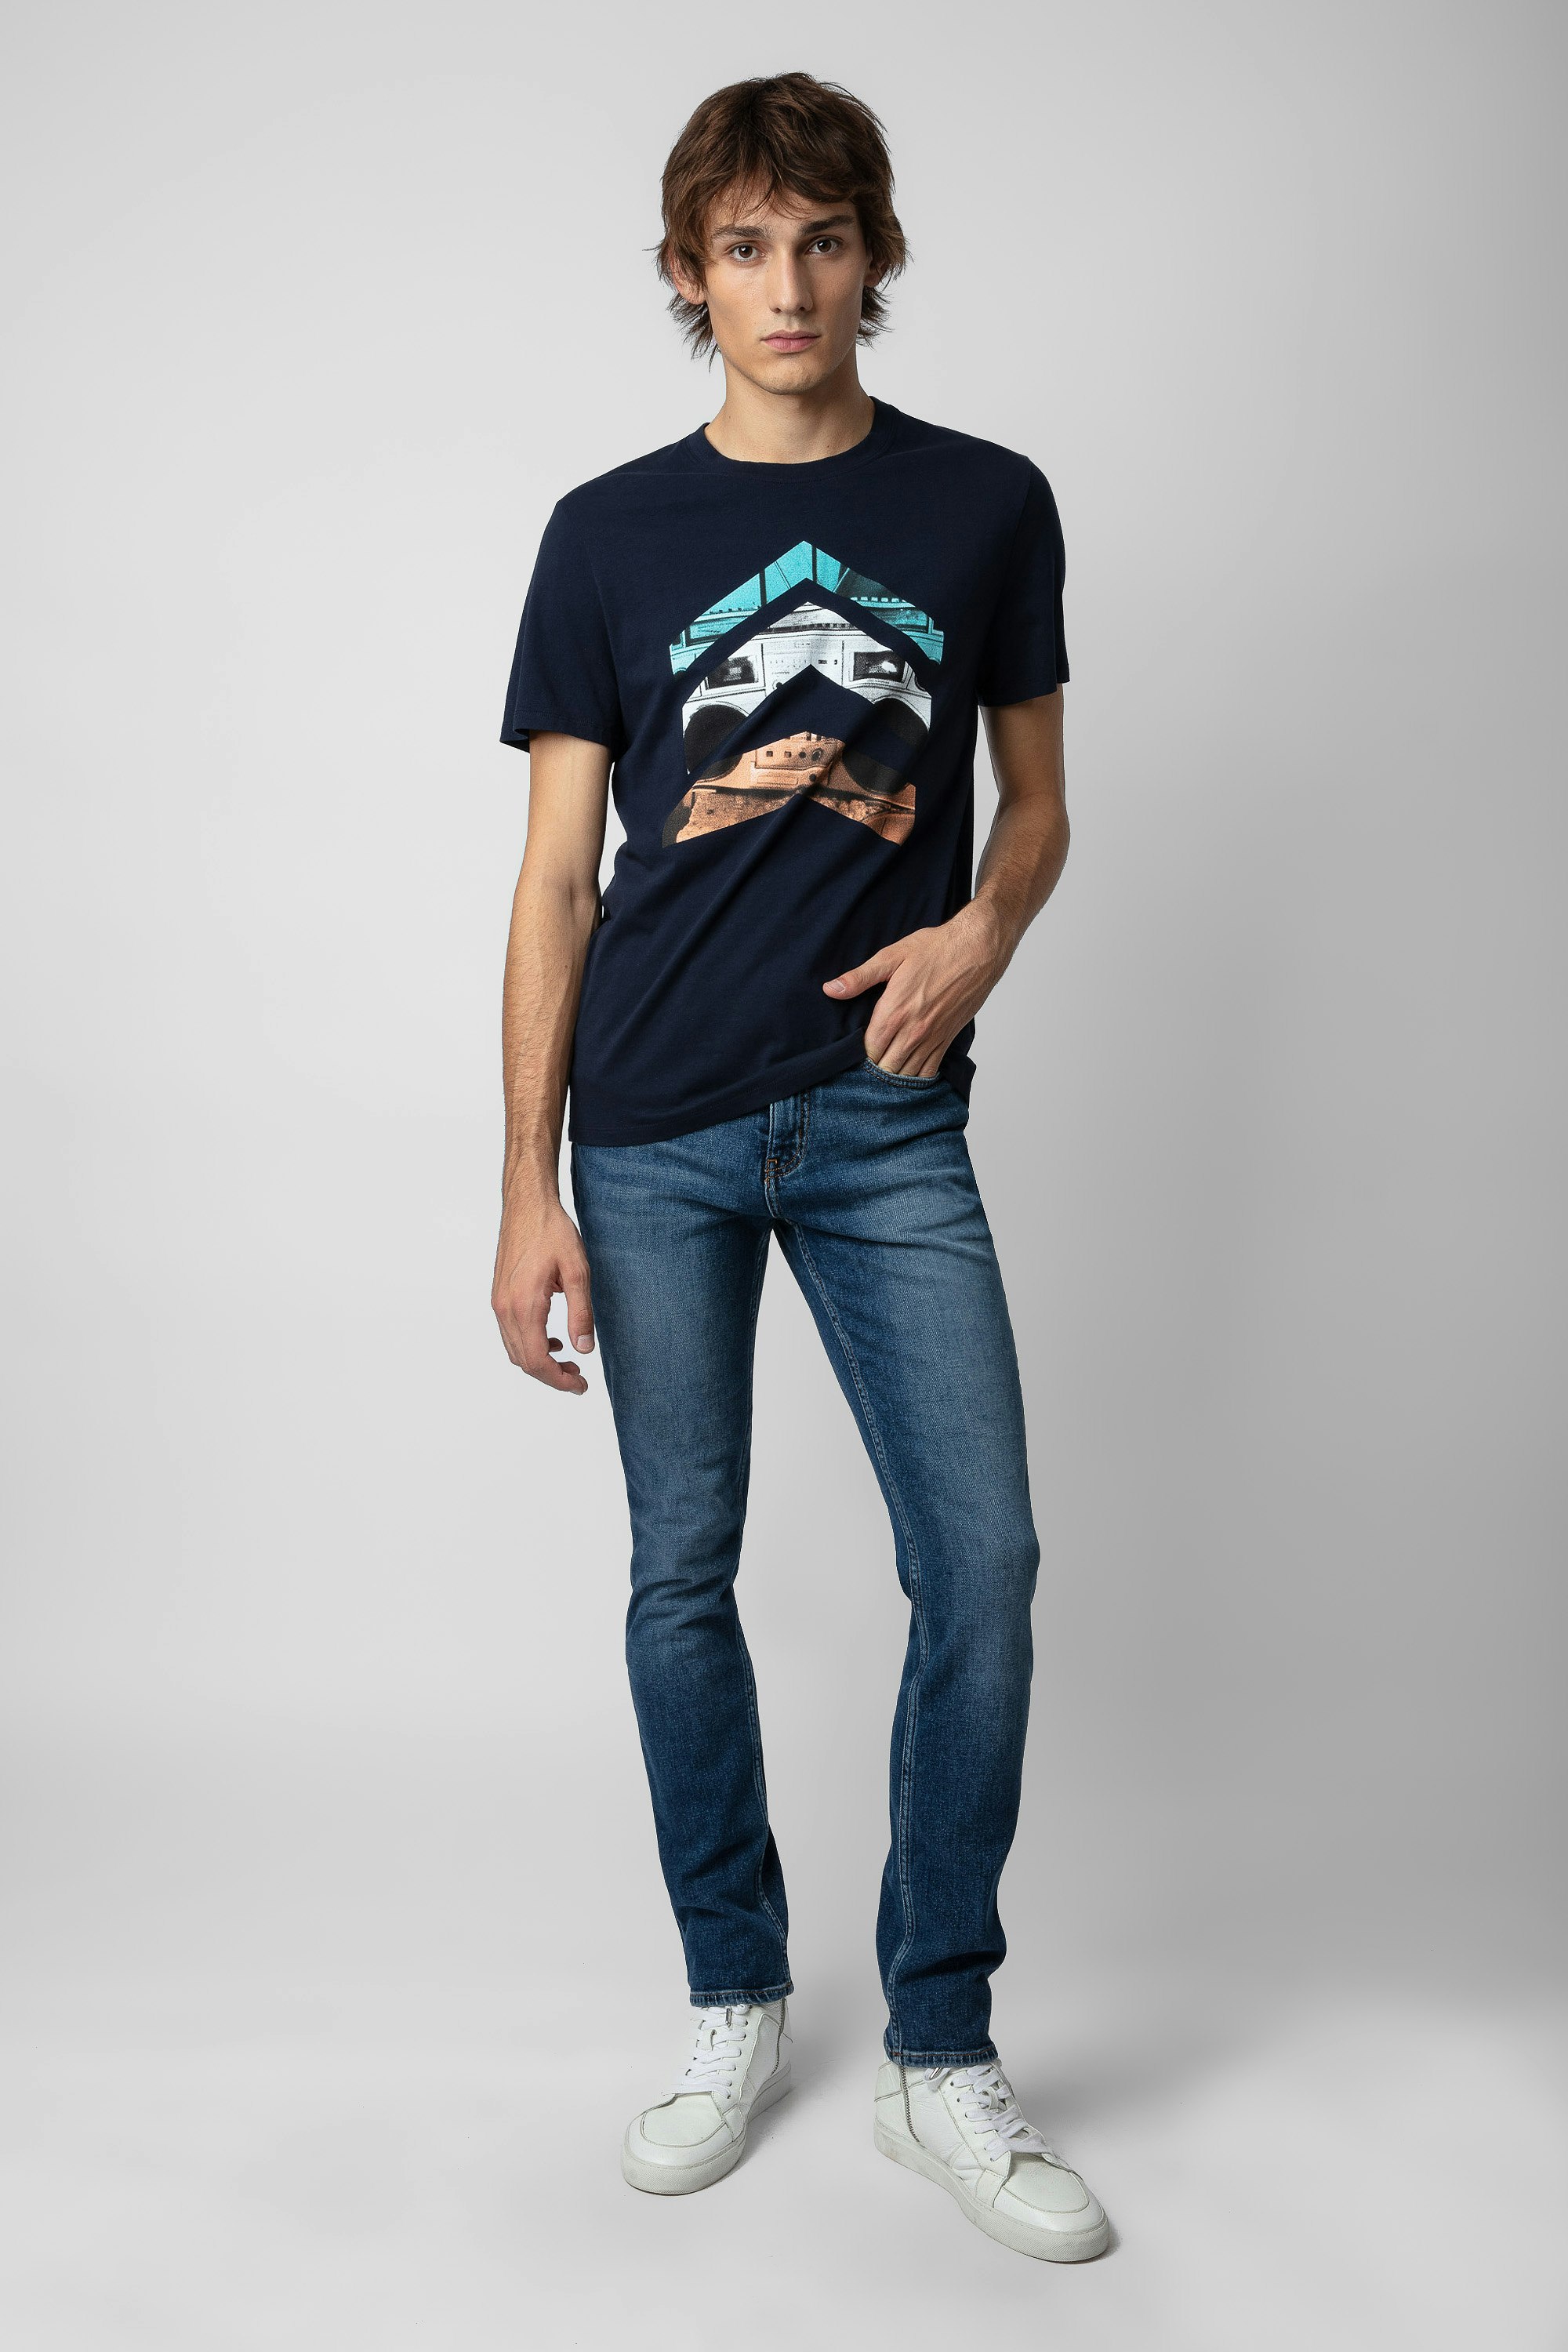 Tommy T-shirt - Men’s navy blue cotton T-shirt with arrow print.